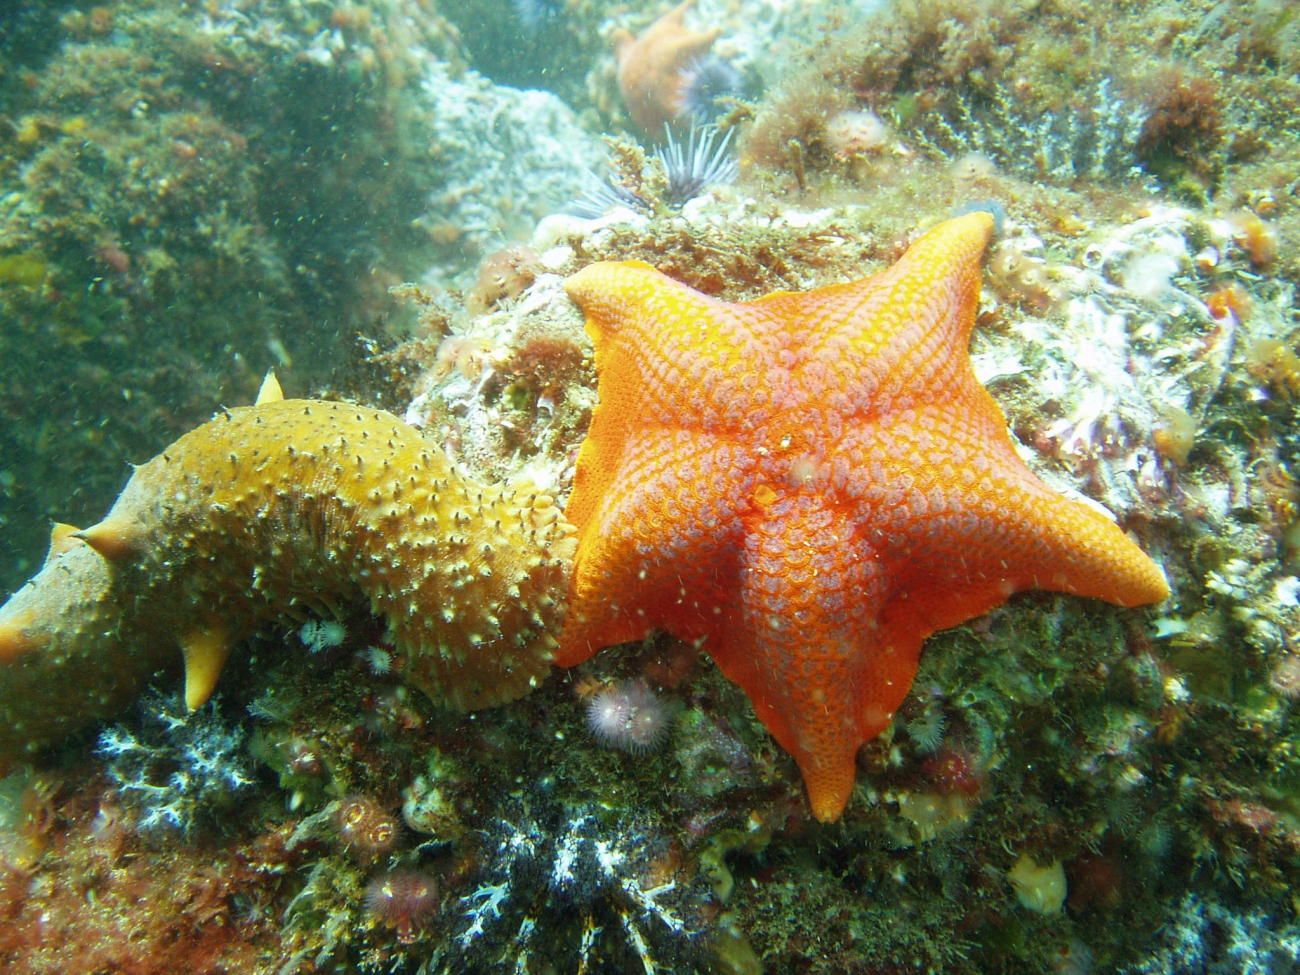 Bat star and large nudibranch